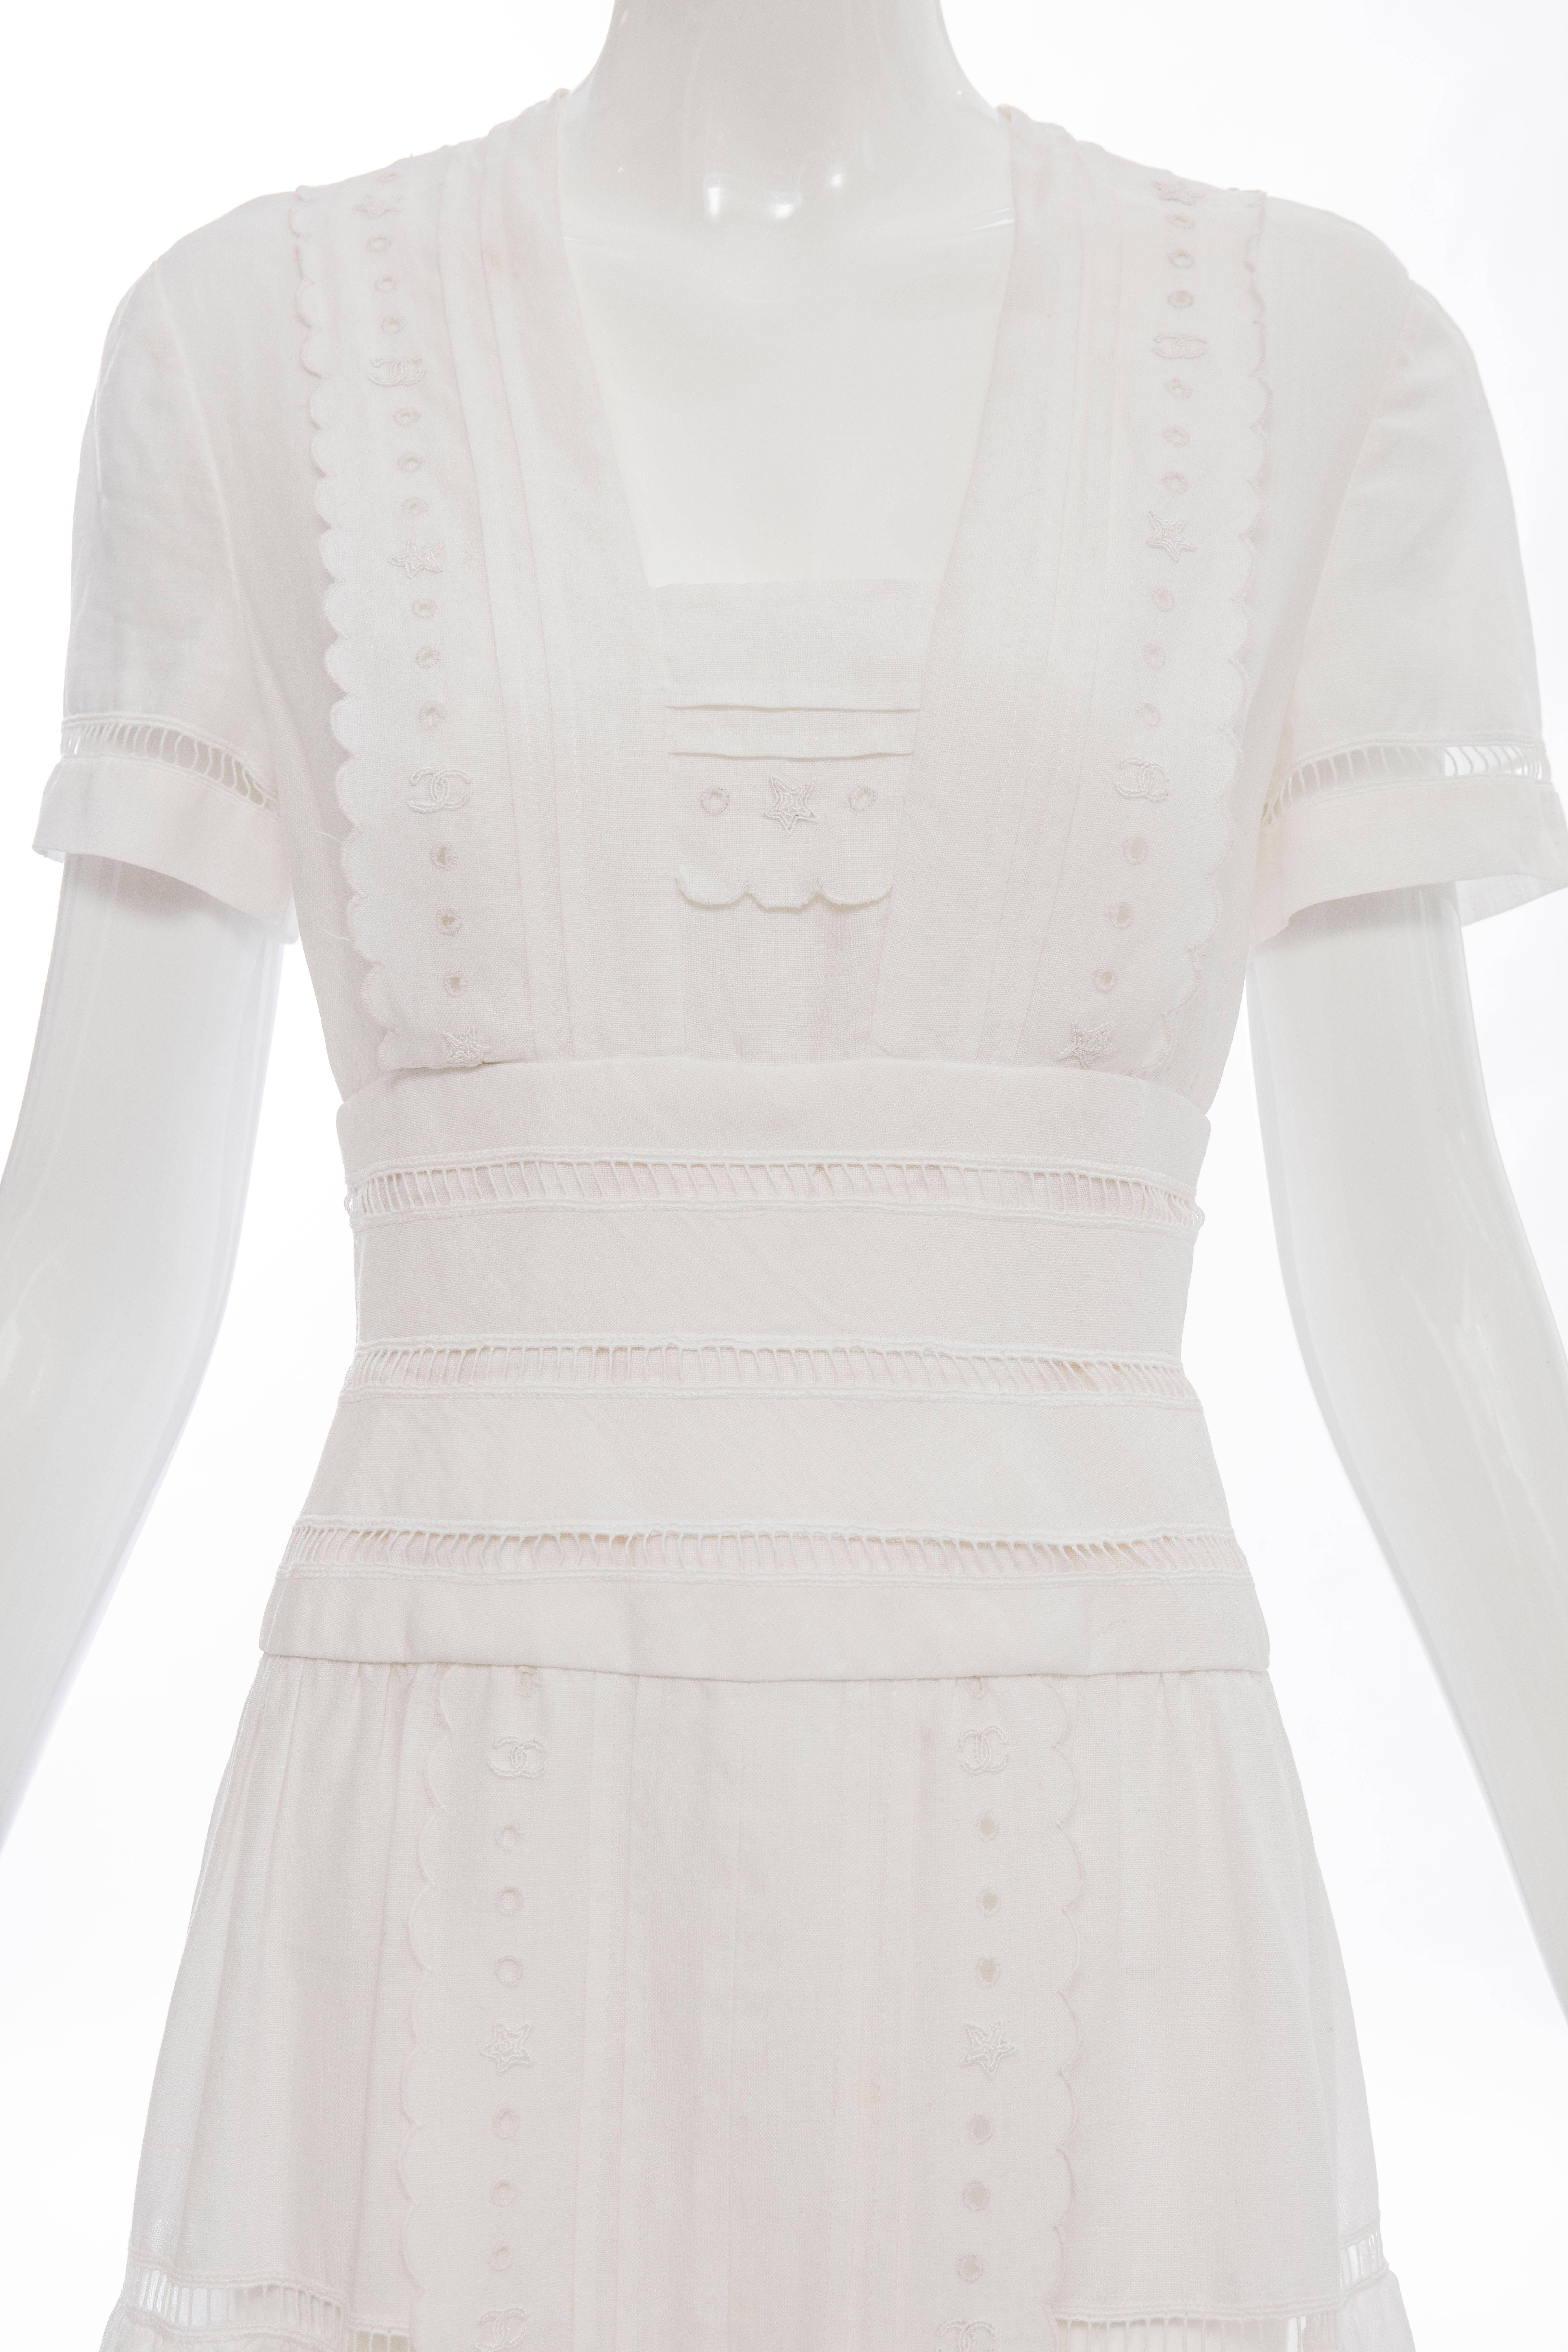 Chanel Short Sleeve Whitework Embroidered Linen Dress, Circa 1980's 1